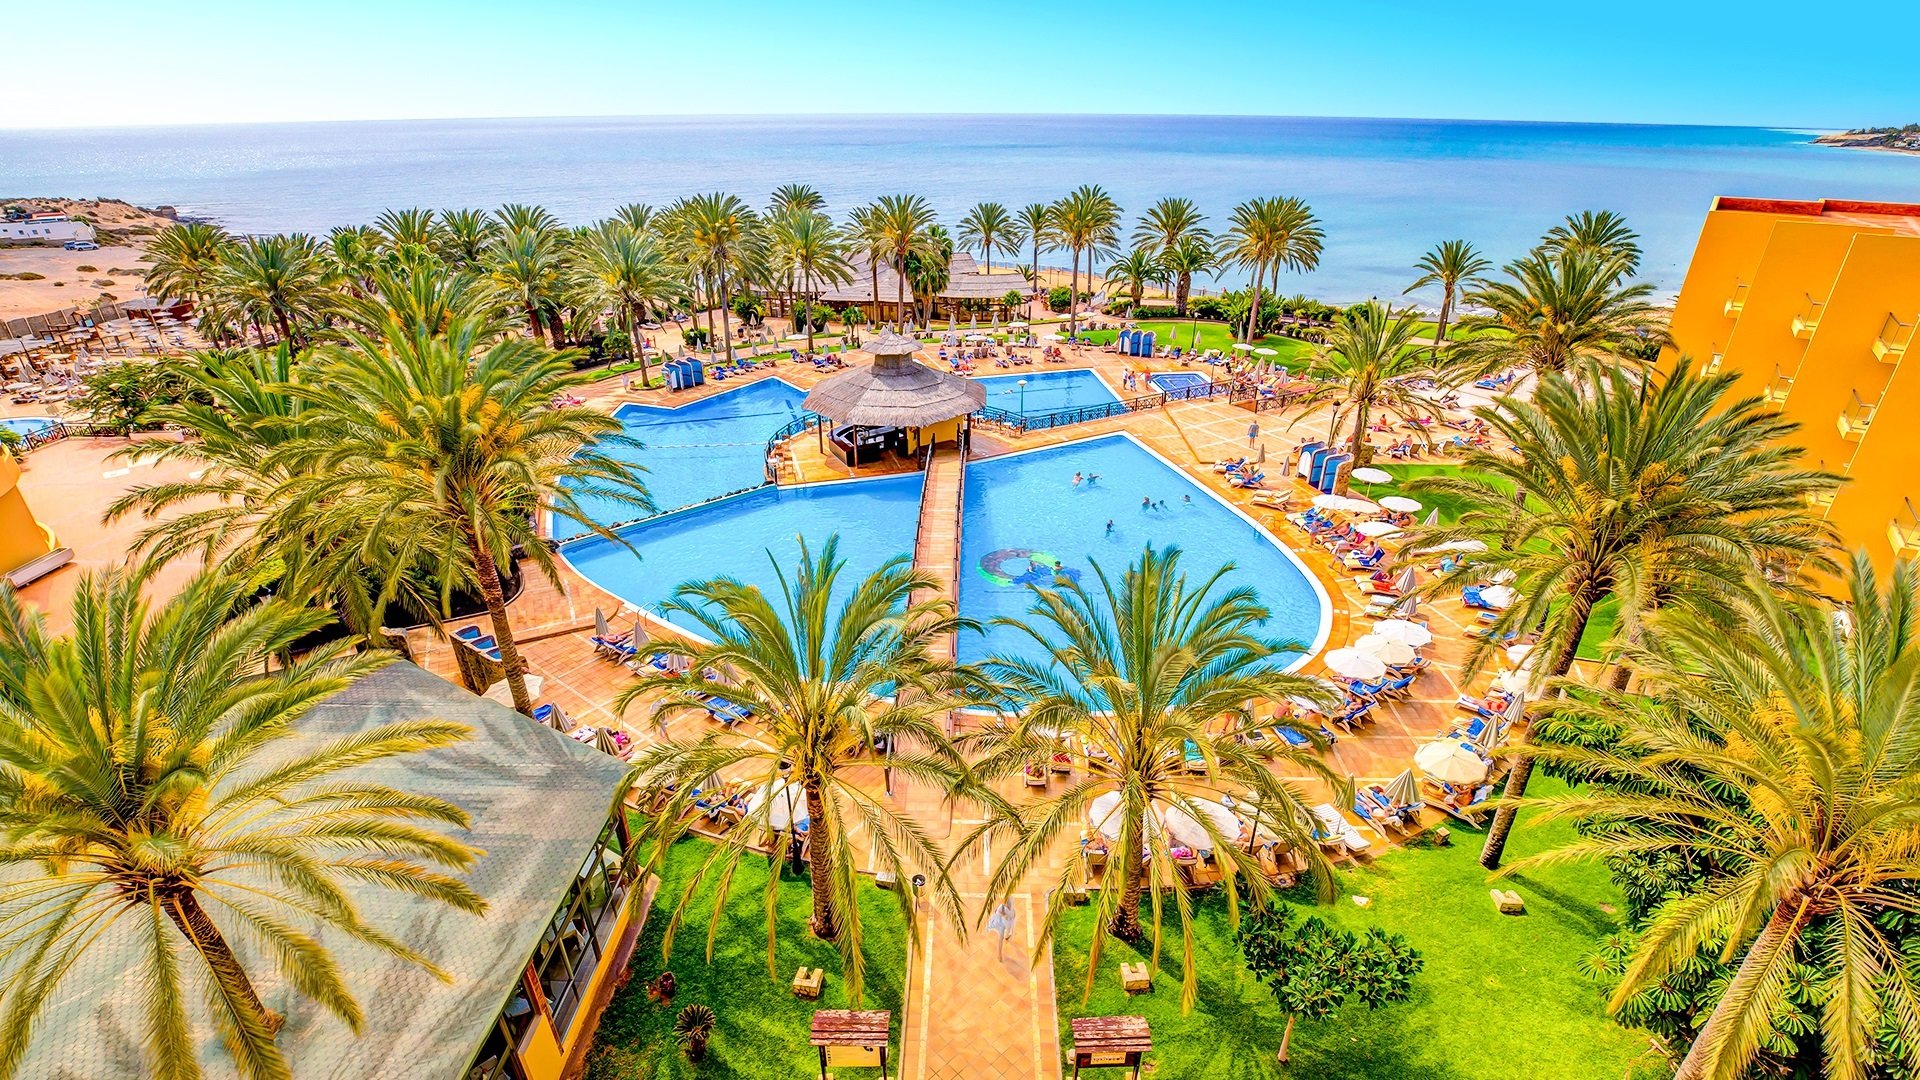 4 sterne hotel sbh costa calma beach resort costa calma / fuerteventura